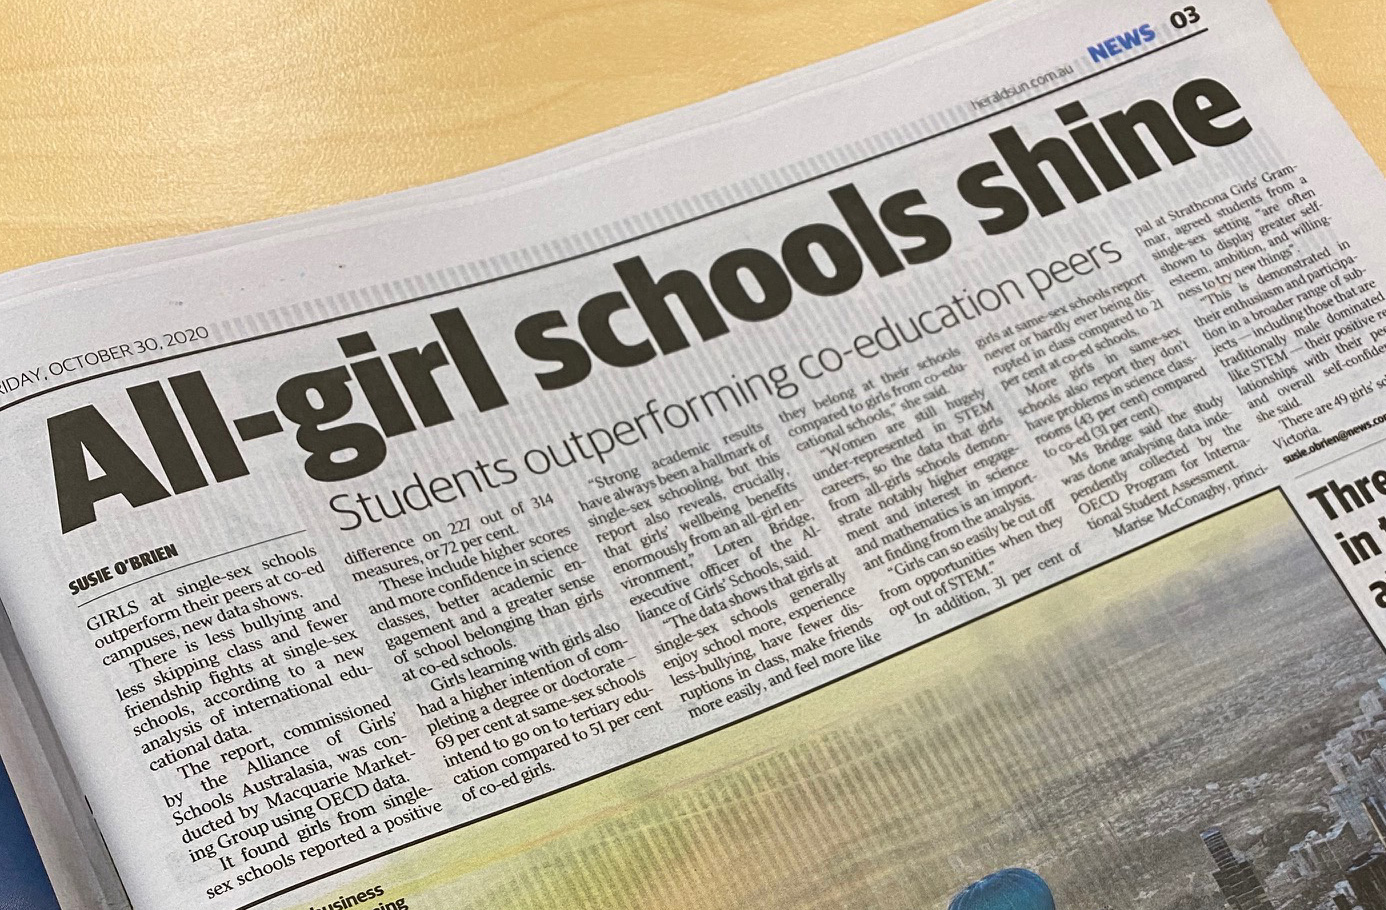 all-girls schools shine article